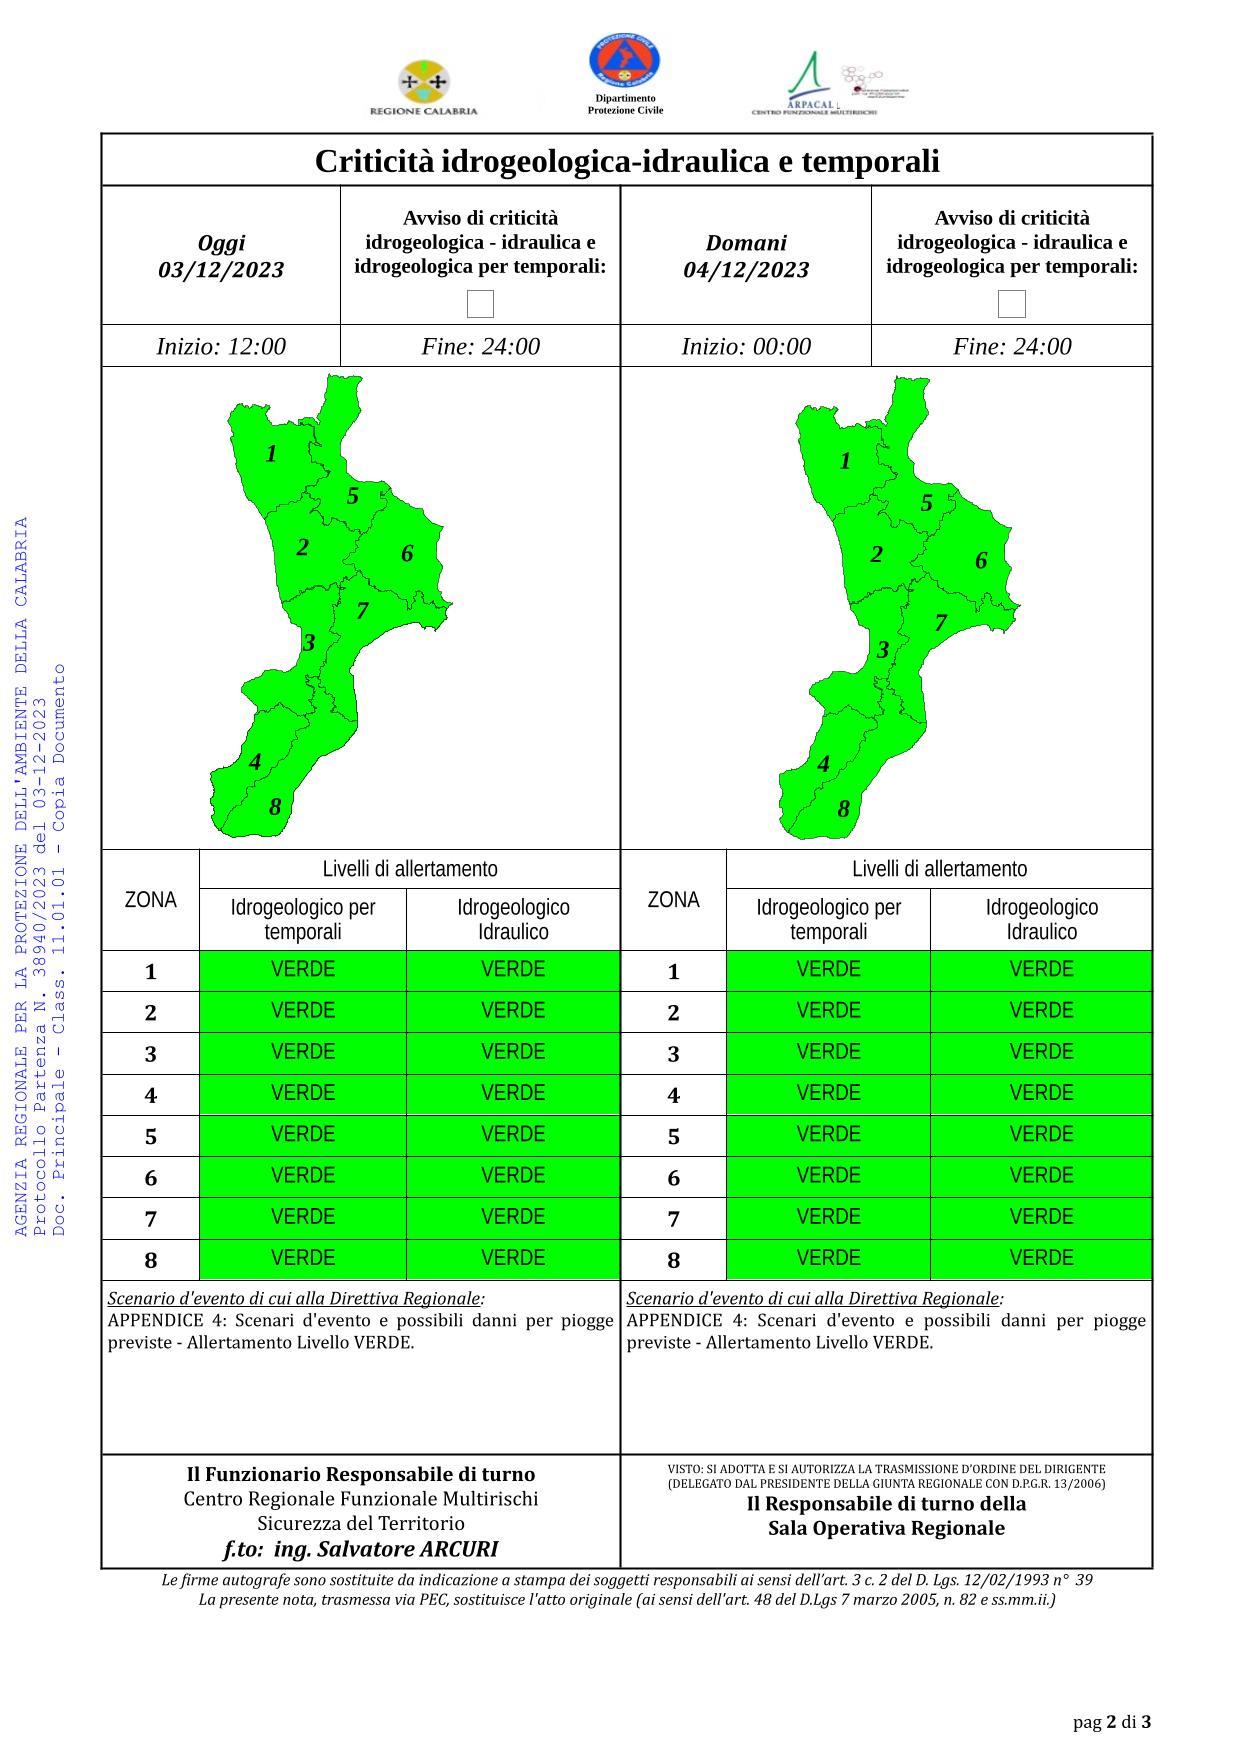 Criticità idrogeologica-idraulica e temporali in Calabria 03-12-2023